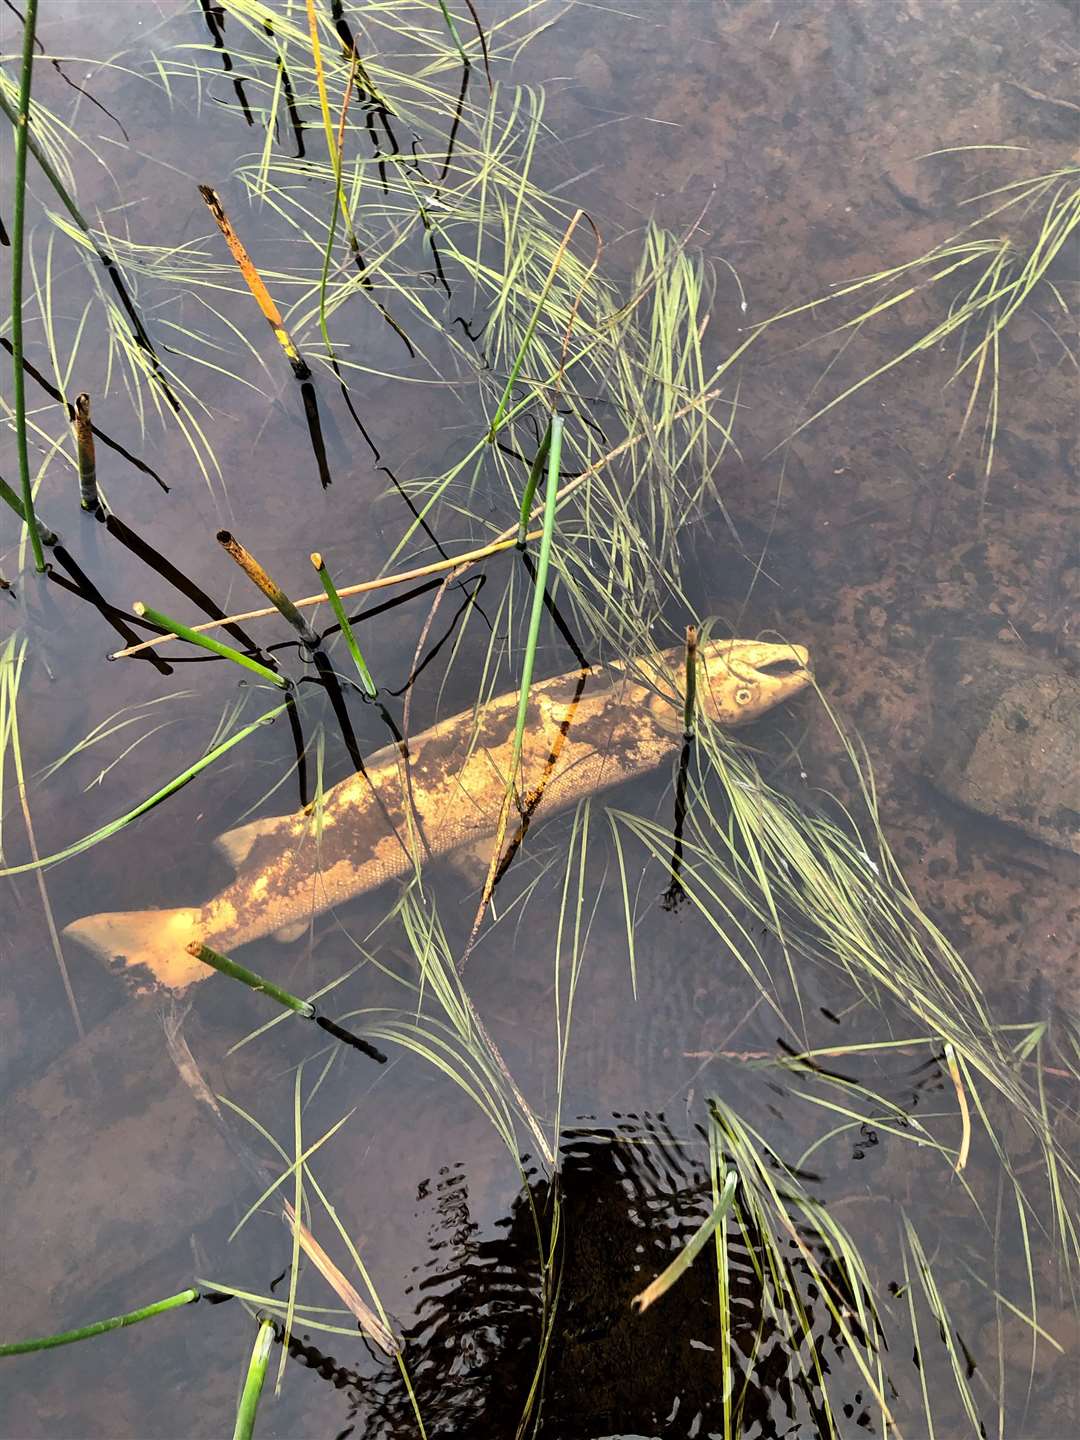 One of the dead fish found in Wick River near Newfield Farm, Milton.